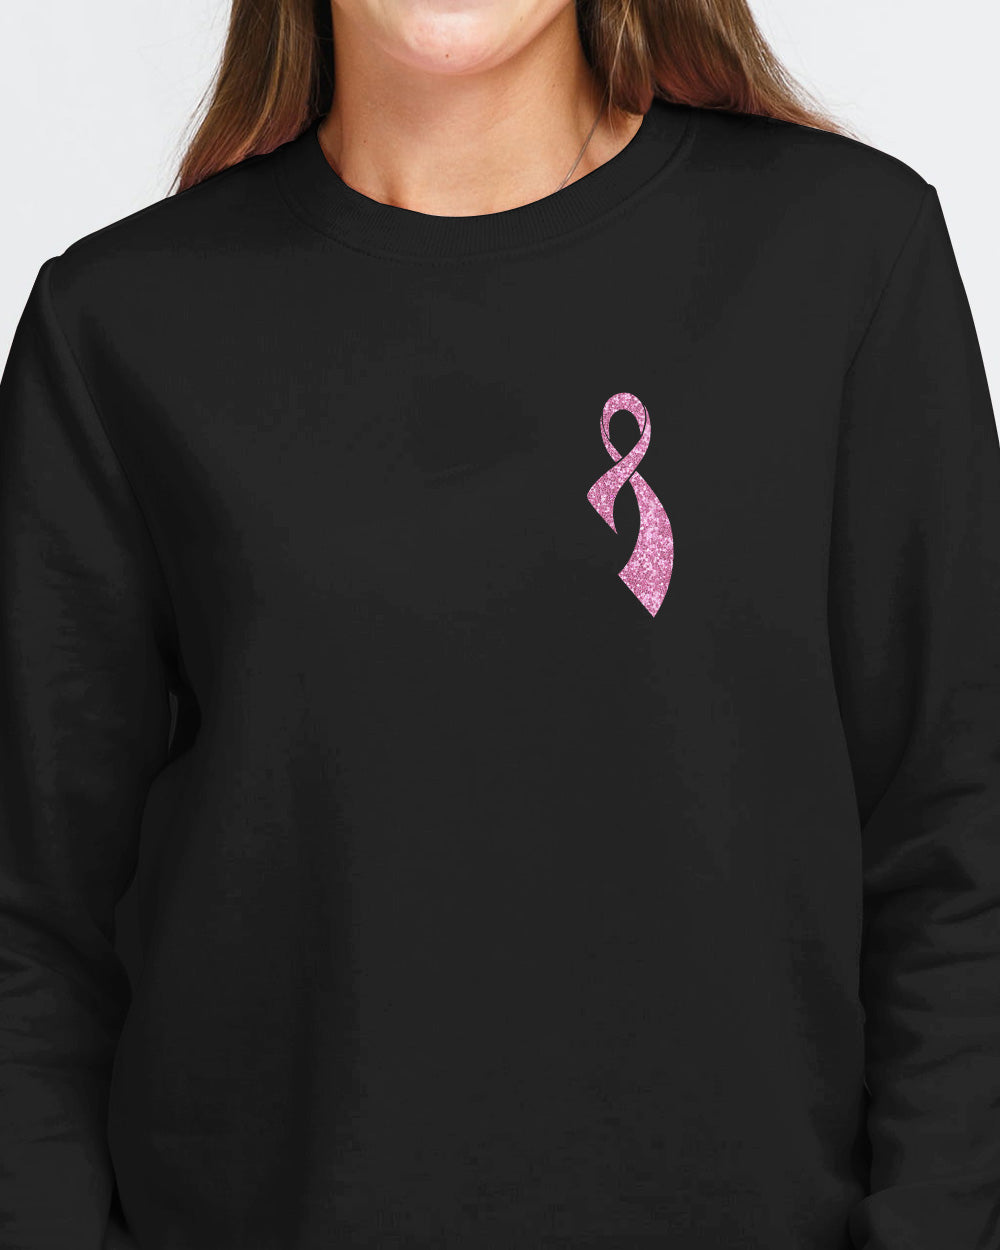 Glitter Fight Ribbon Flag Women's Breast Cancer Awareness Sweatshirt